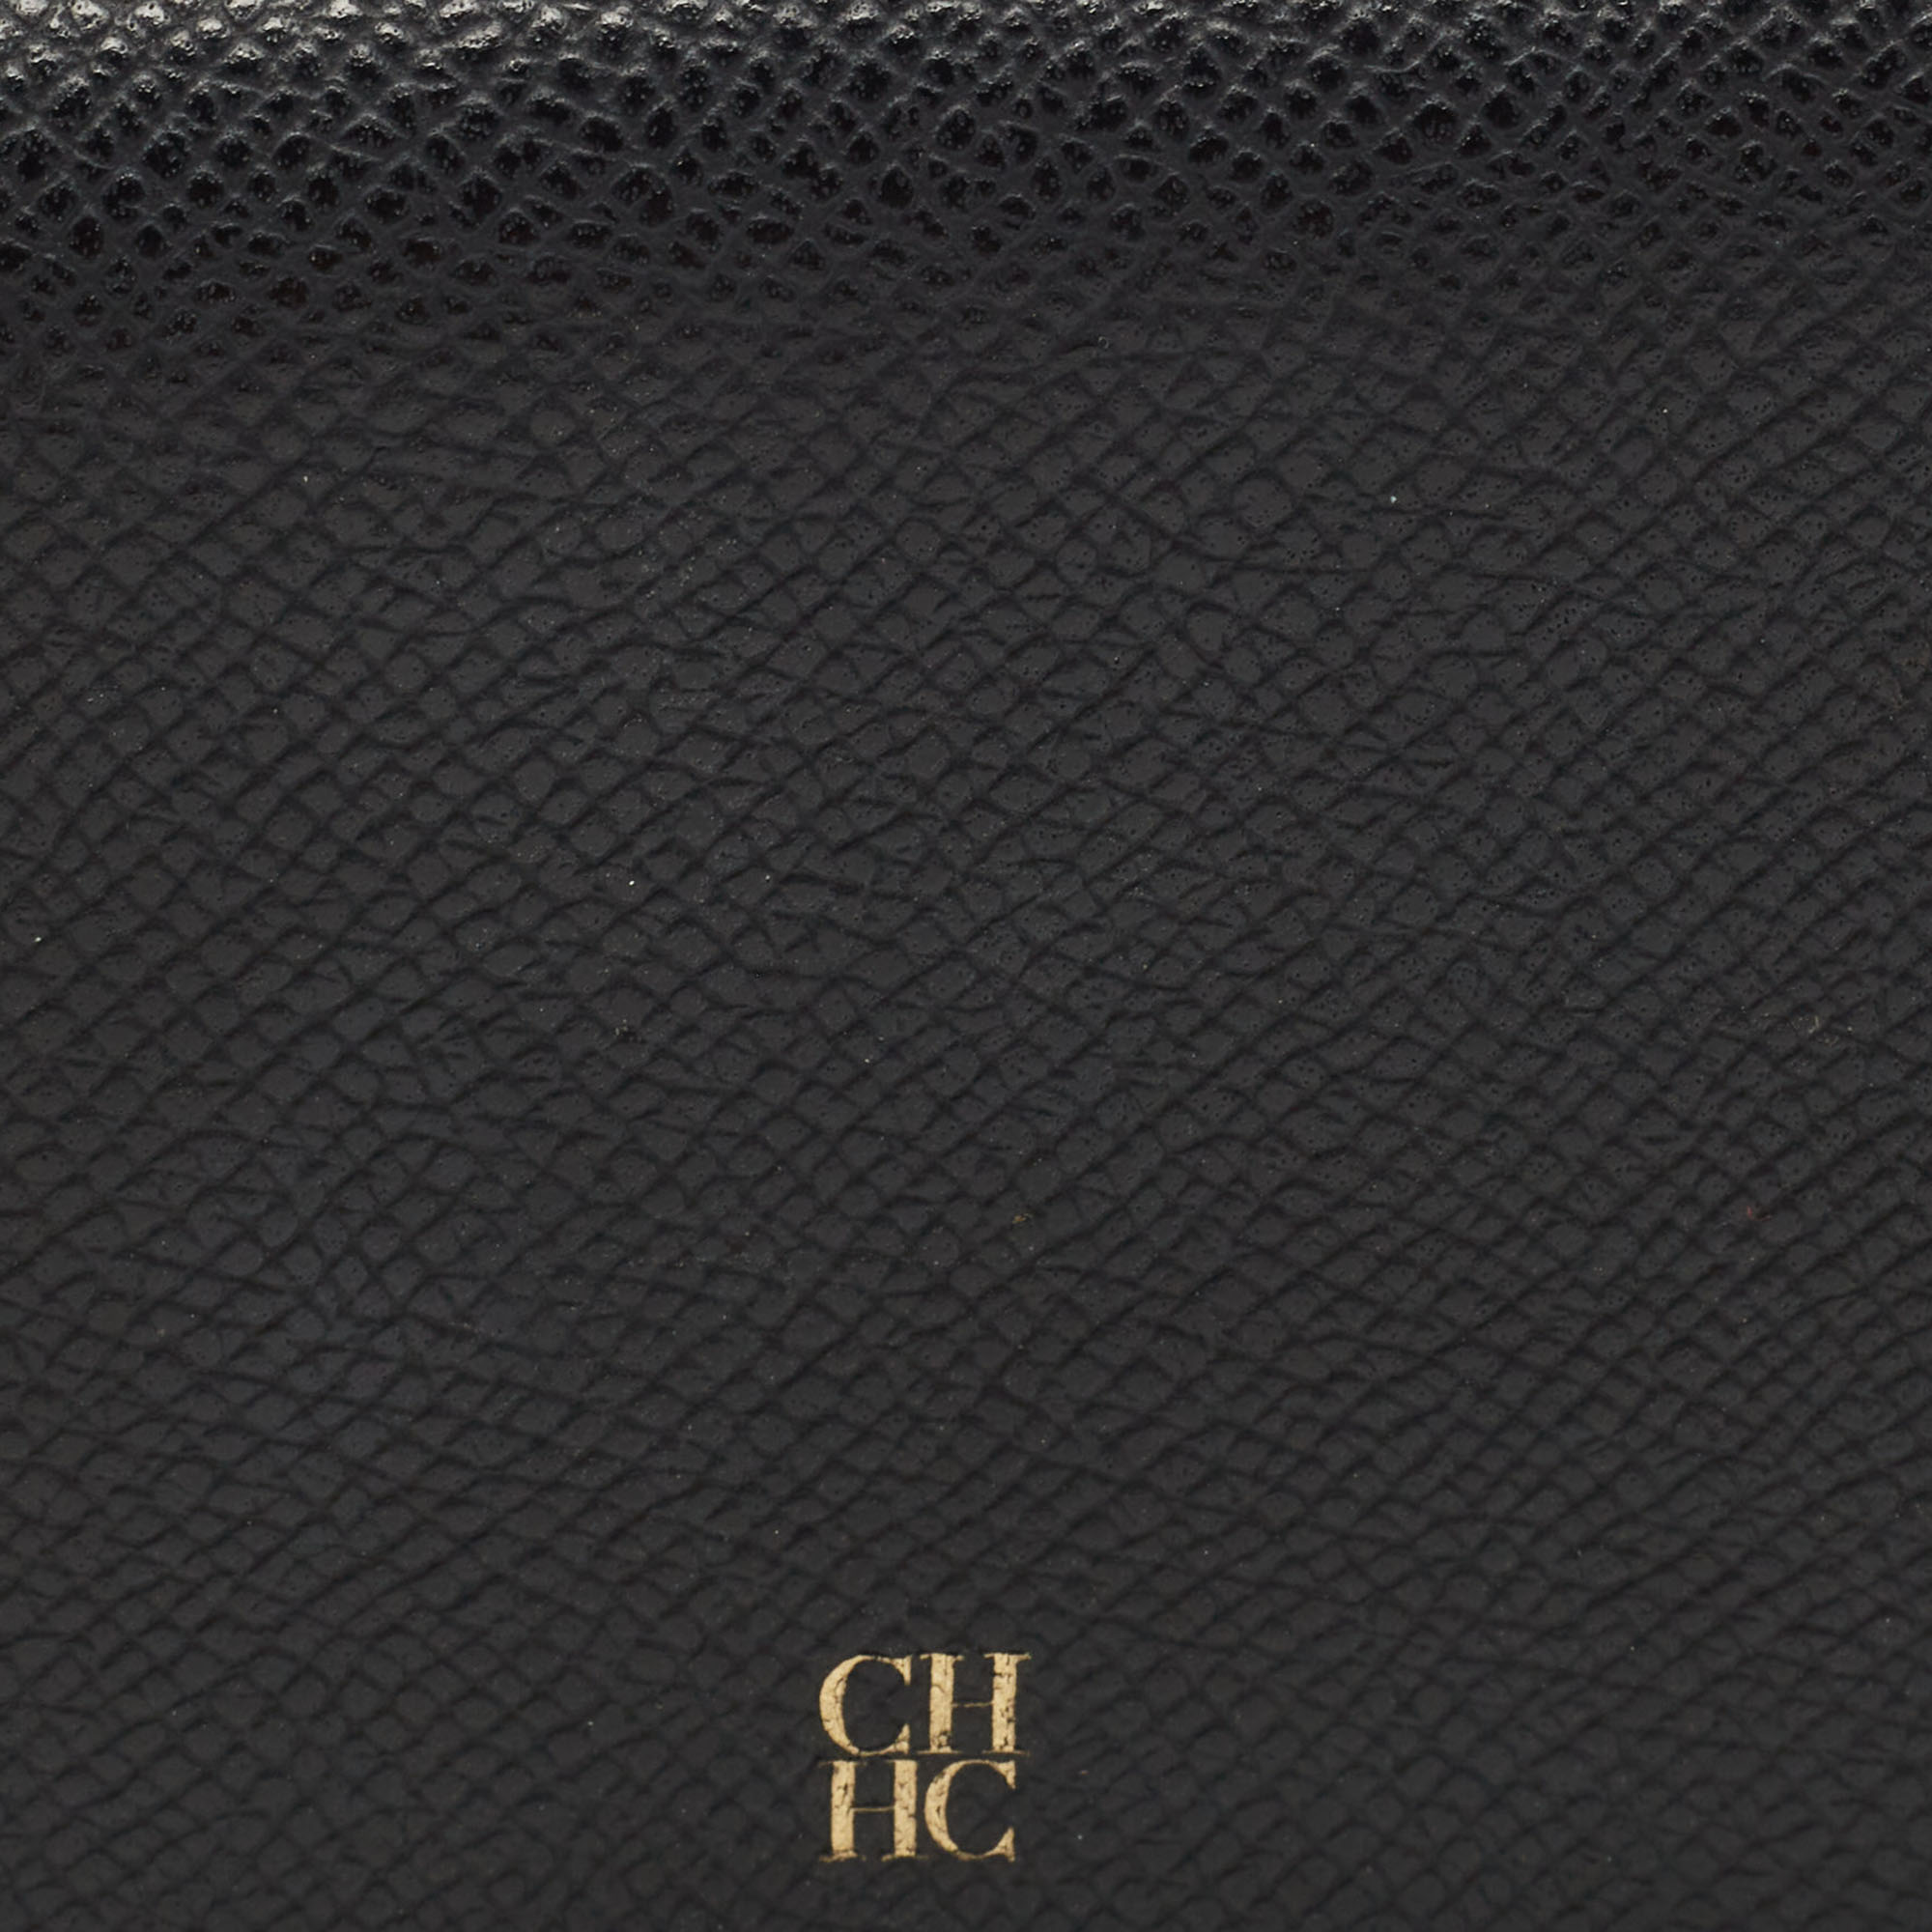 CH Carolina Herrera Black Leather Bifold Wallet